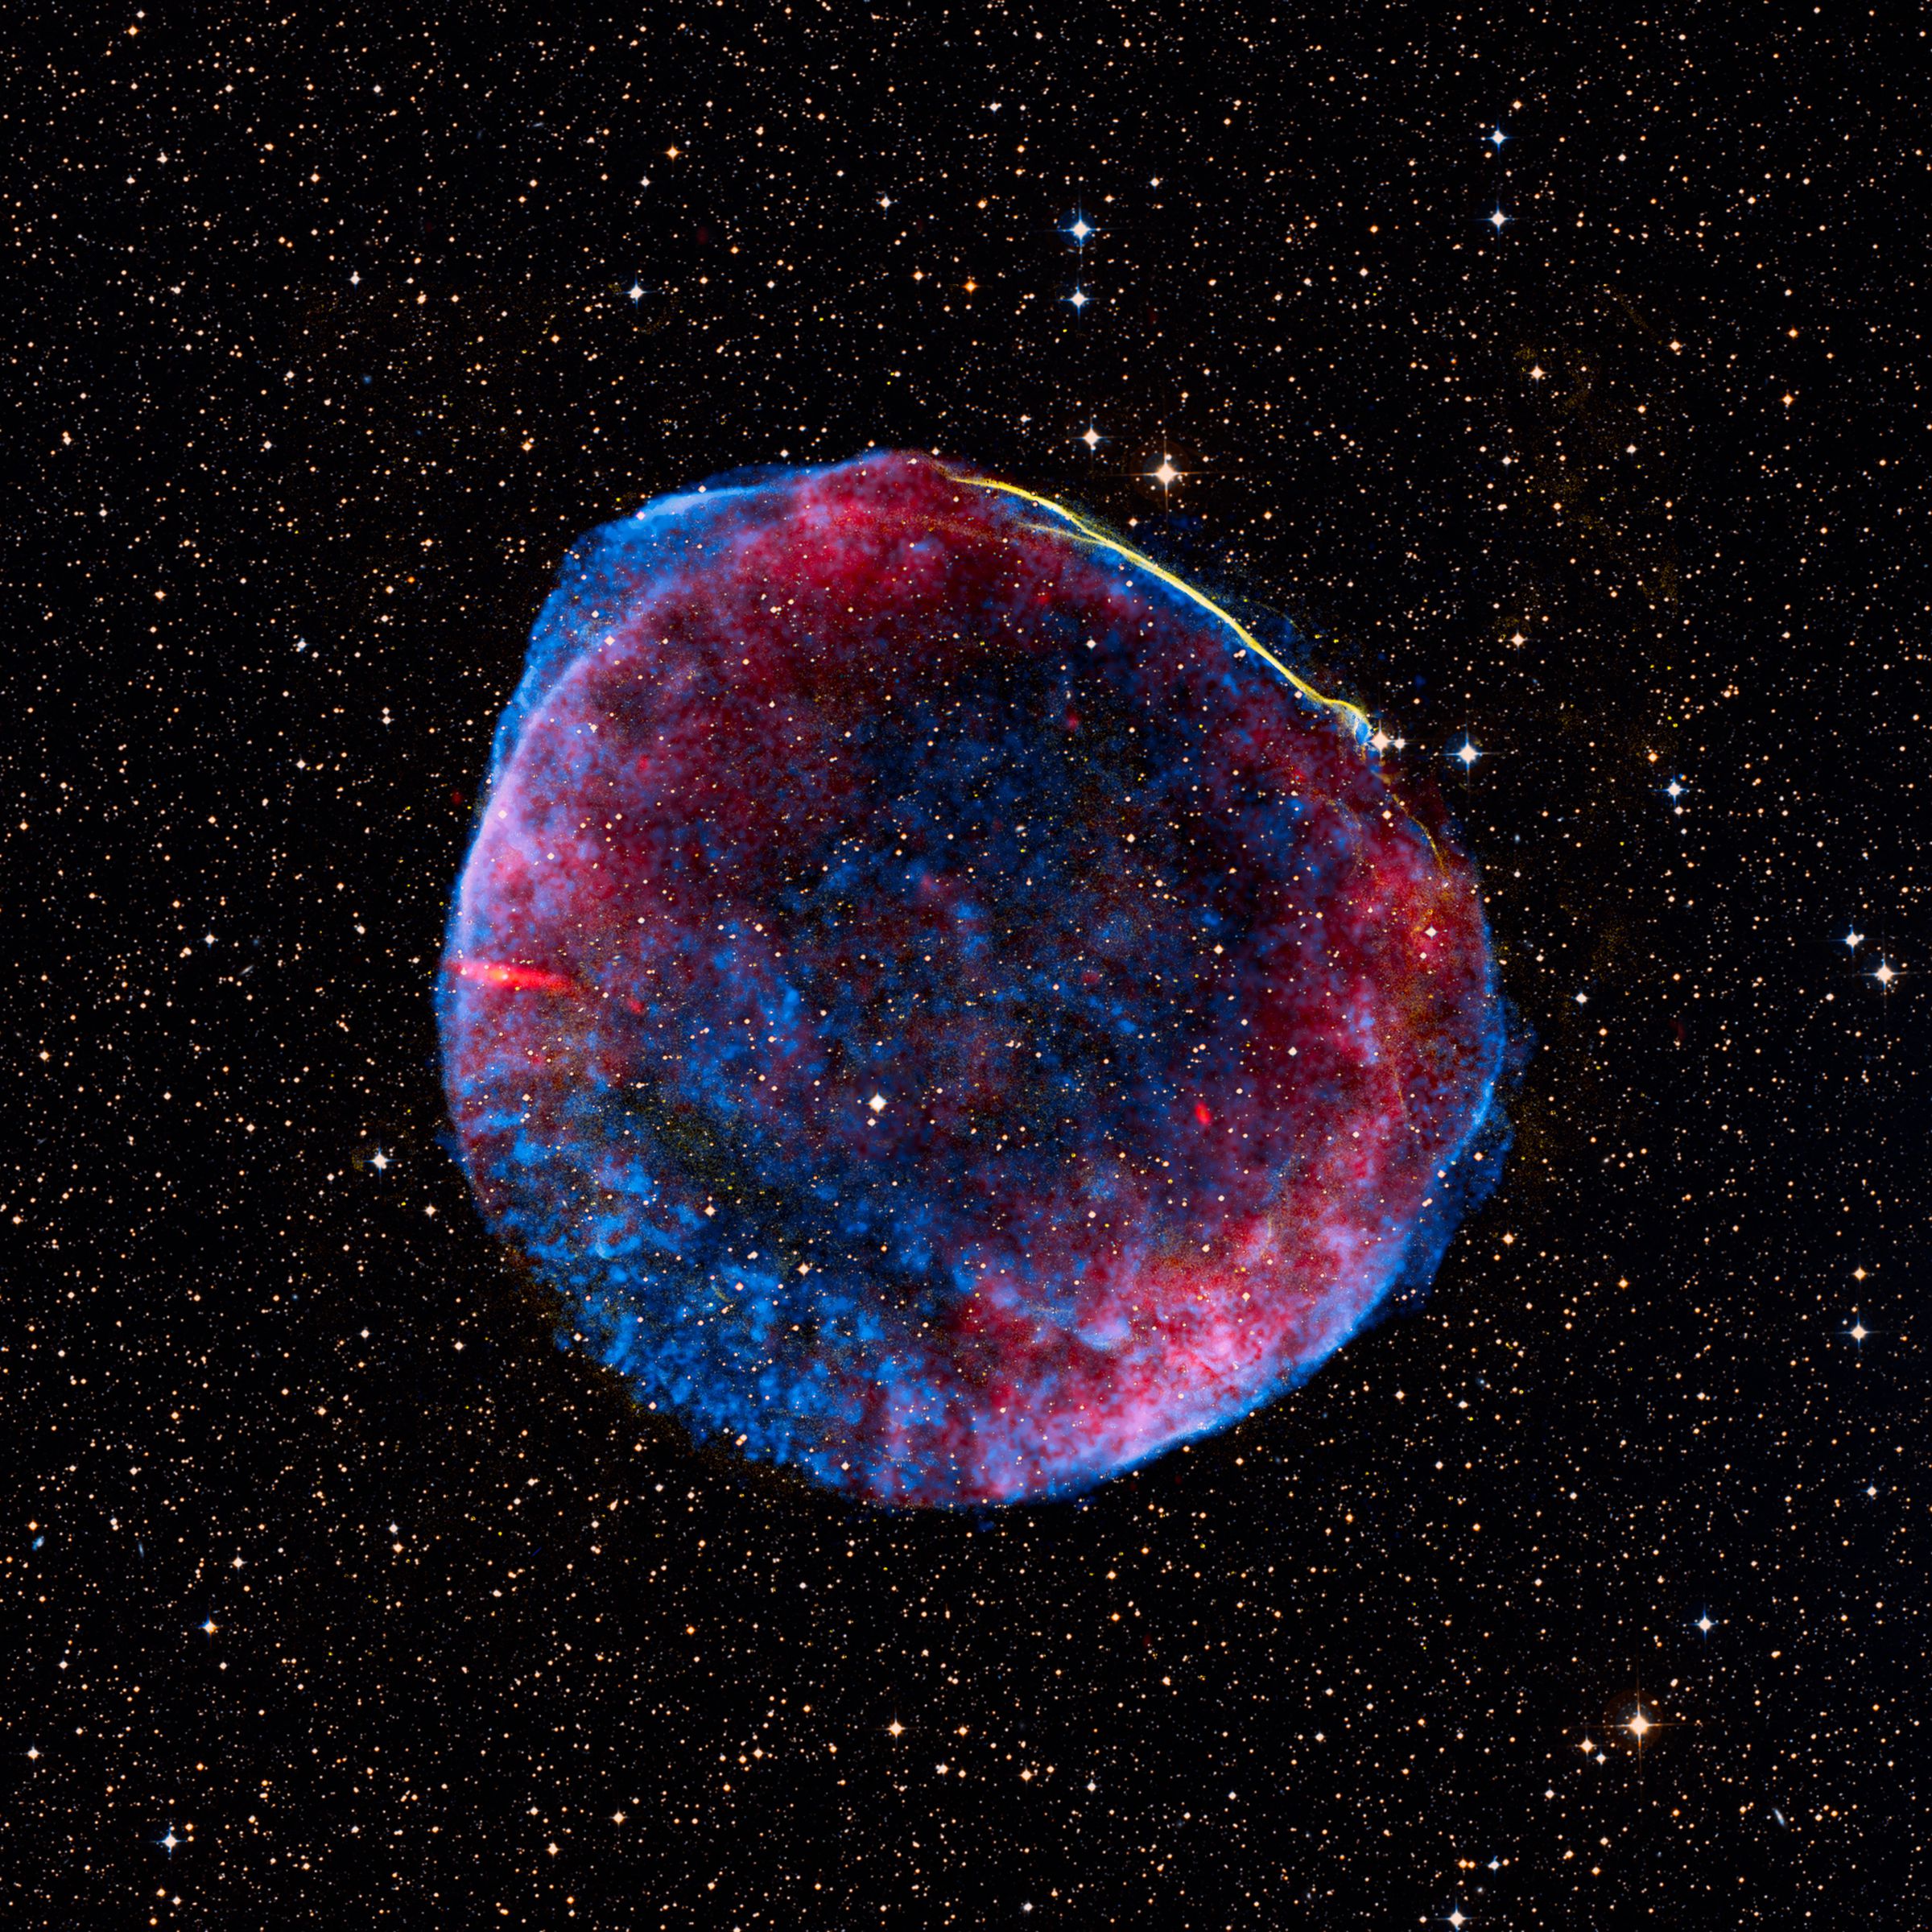 'Cosmos' Space-Time Odyssey photos from NASA